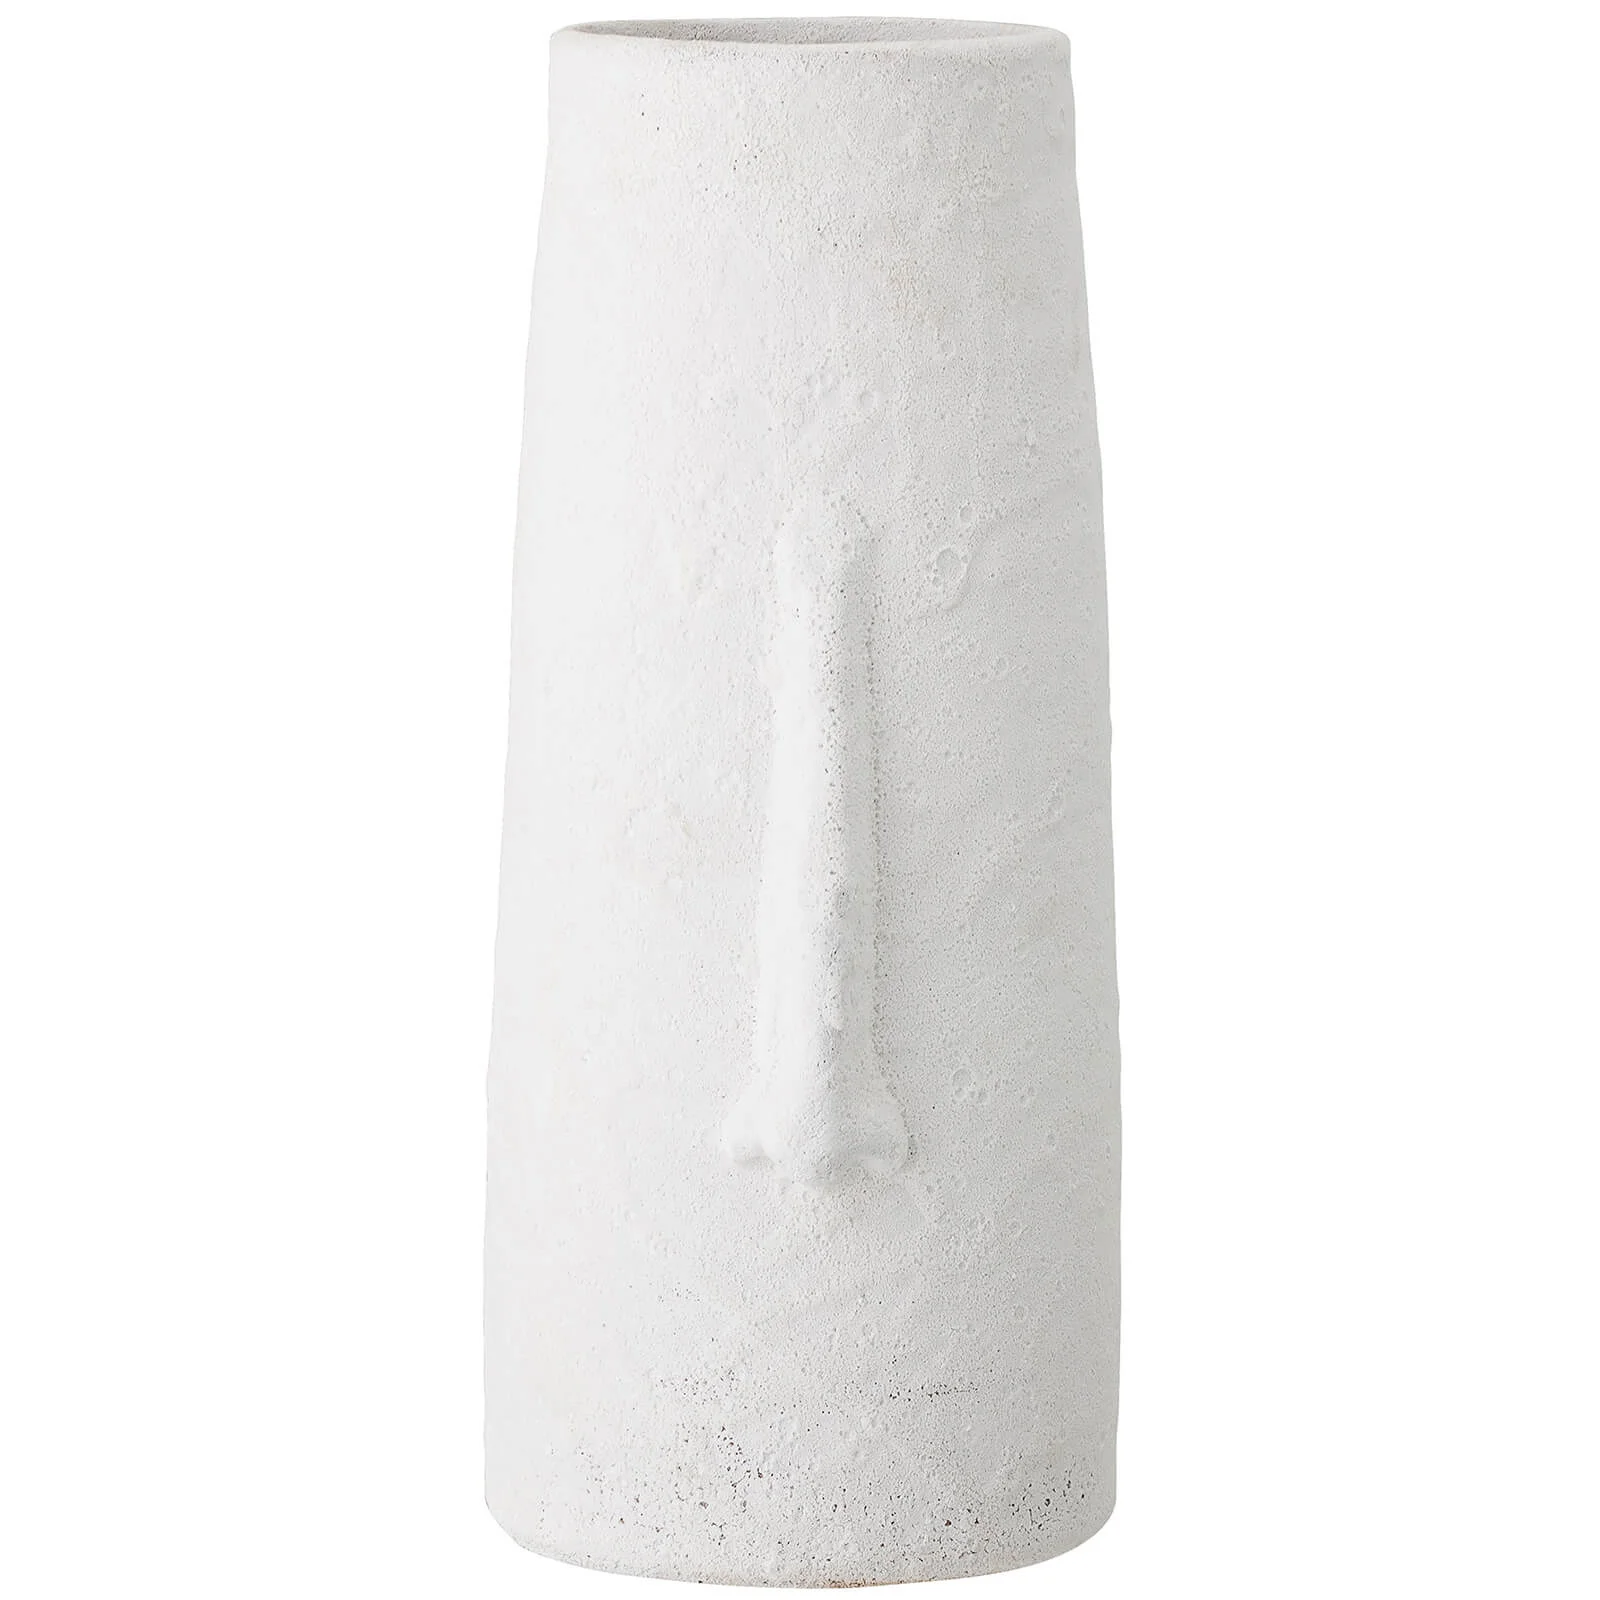 Bloomingville Deco Vase - White Image 1